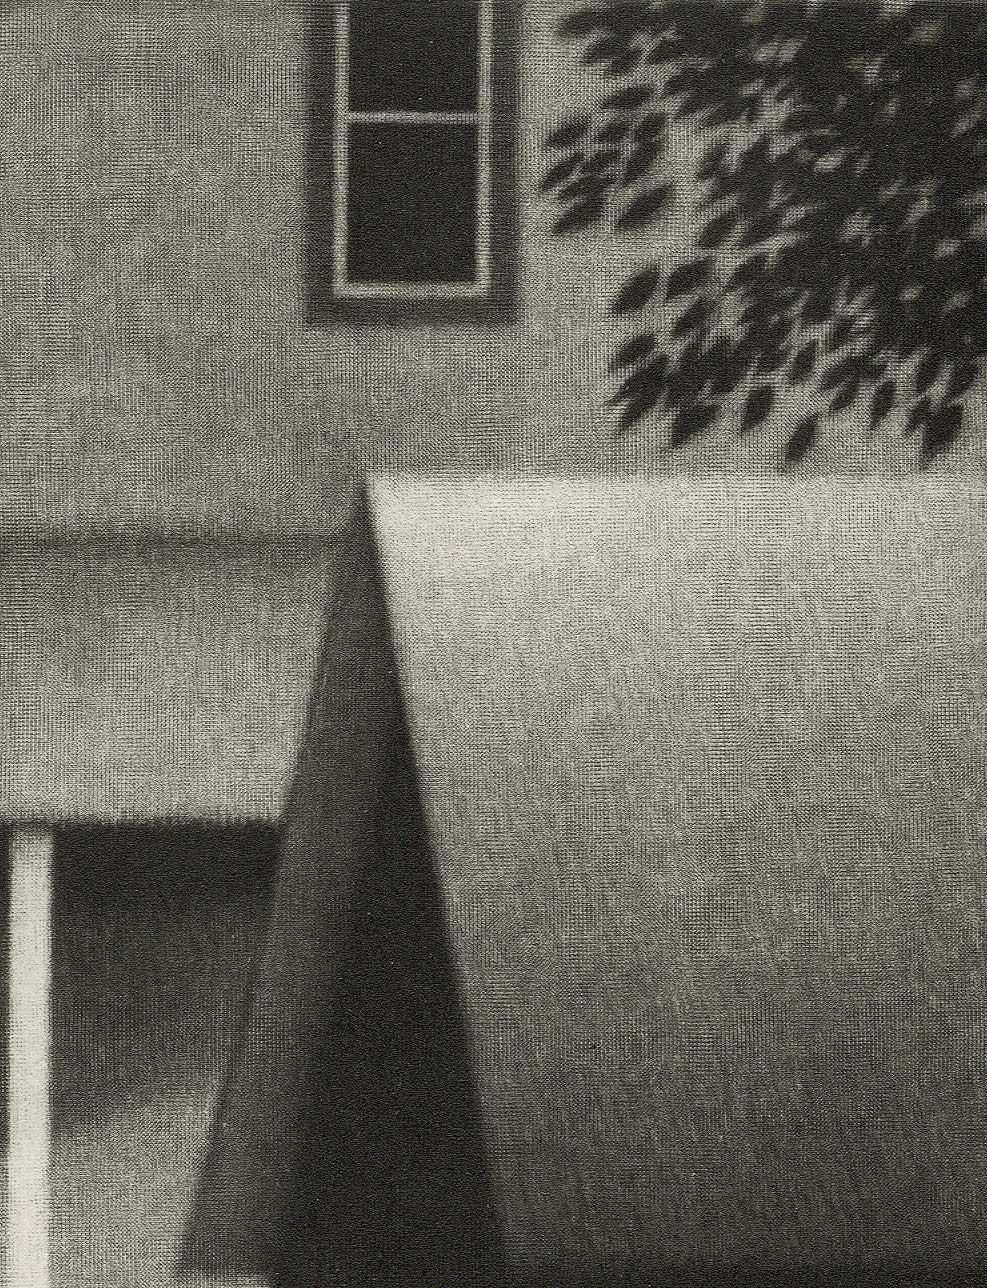 Evening with White Porch (a calm suburban setting) - American Modern Print by Robert Kipniss